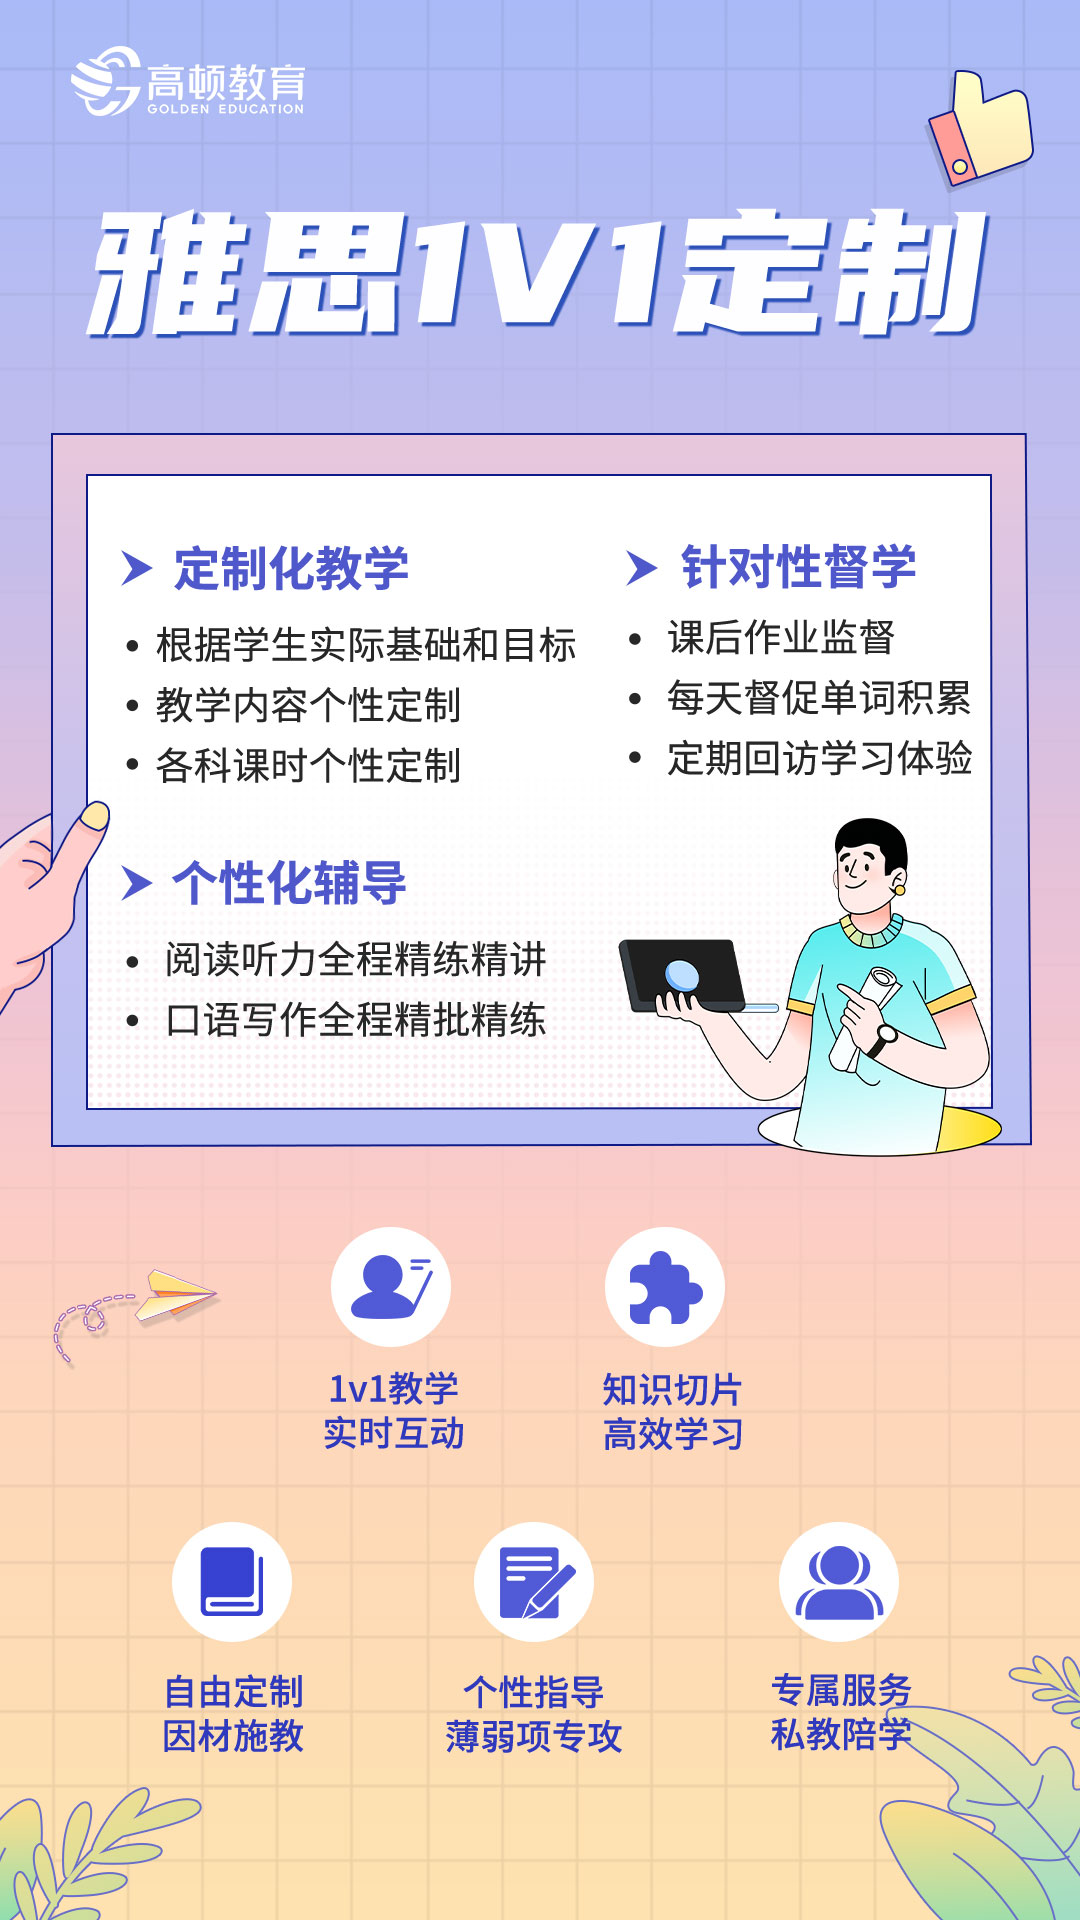 https://simg01.gaodunwangxiao.com/uploadfiles/product-center/202210/24/d727e_20221024105220.jpg